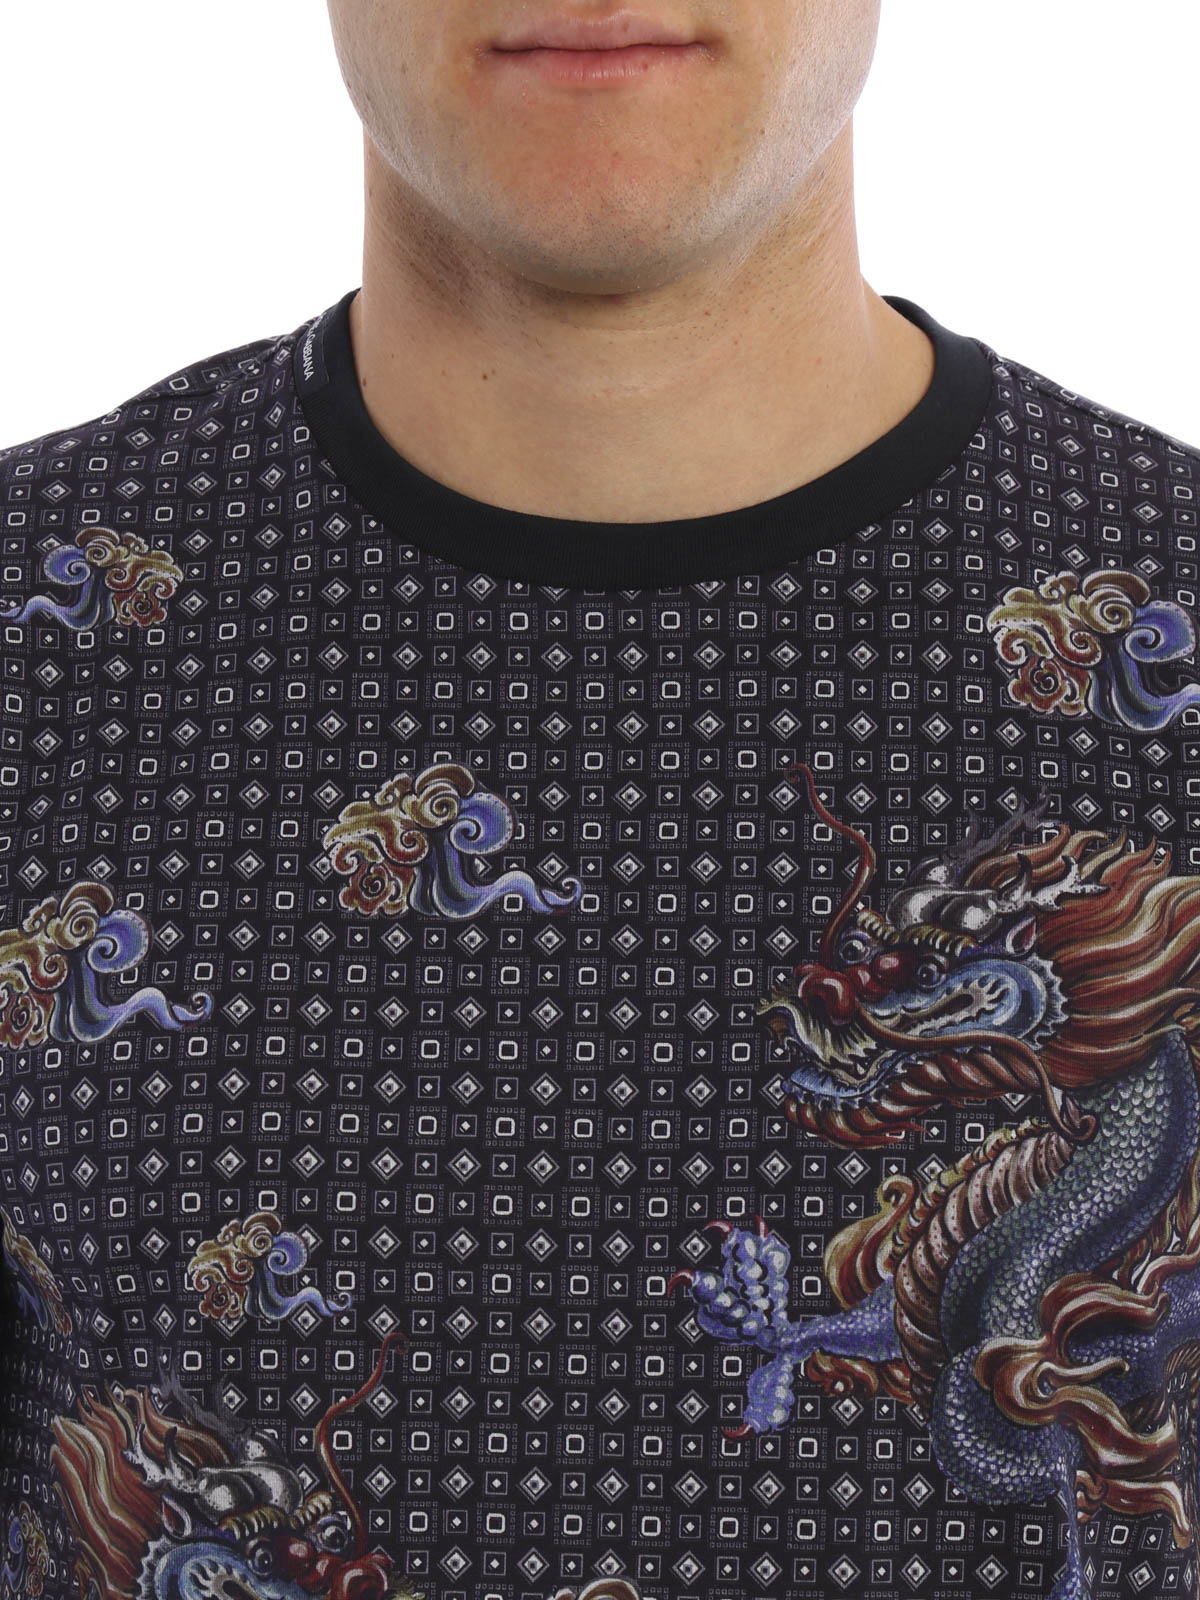 Dolce & Gabbana - Chinese dragons print T-shirt G8FV9TFP7HCX0860